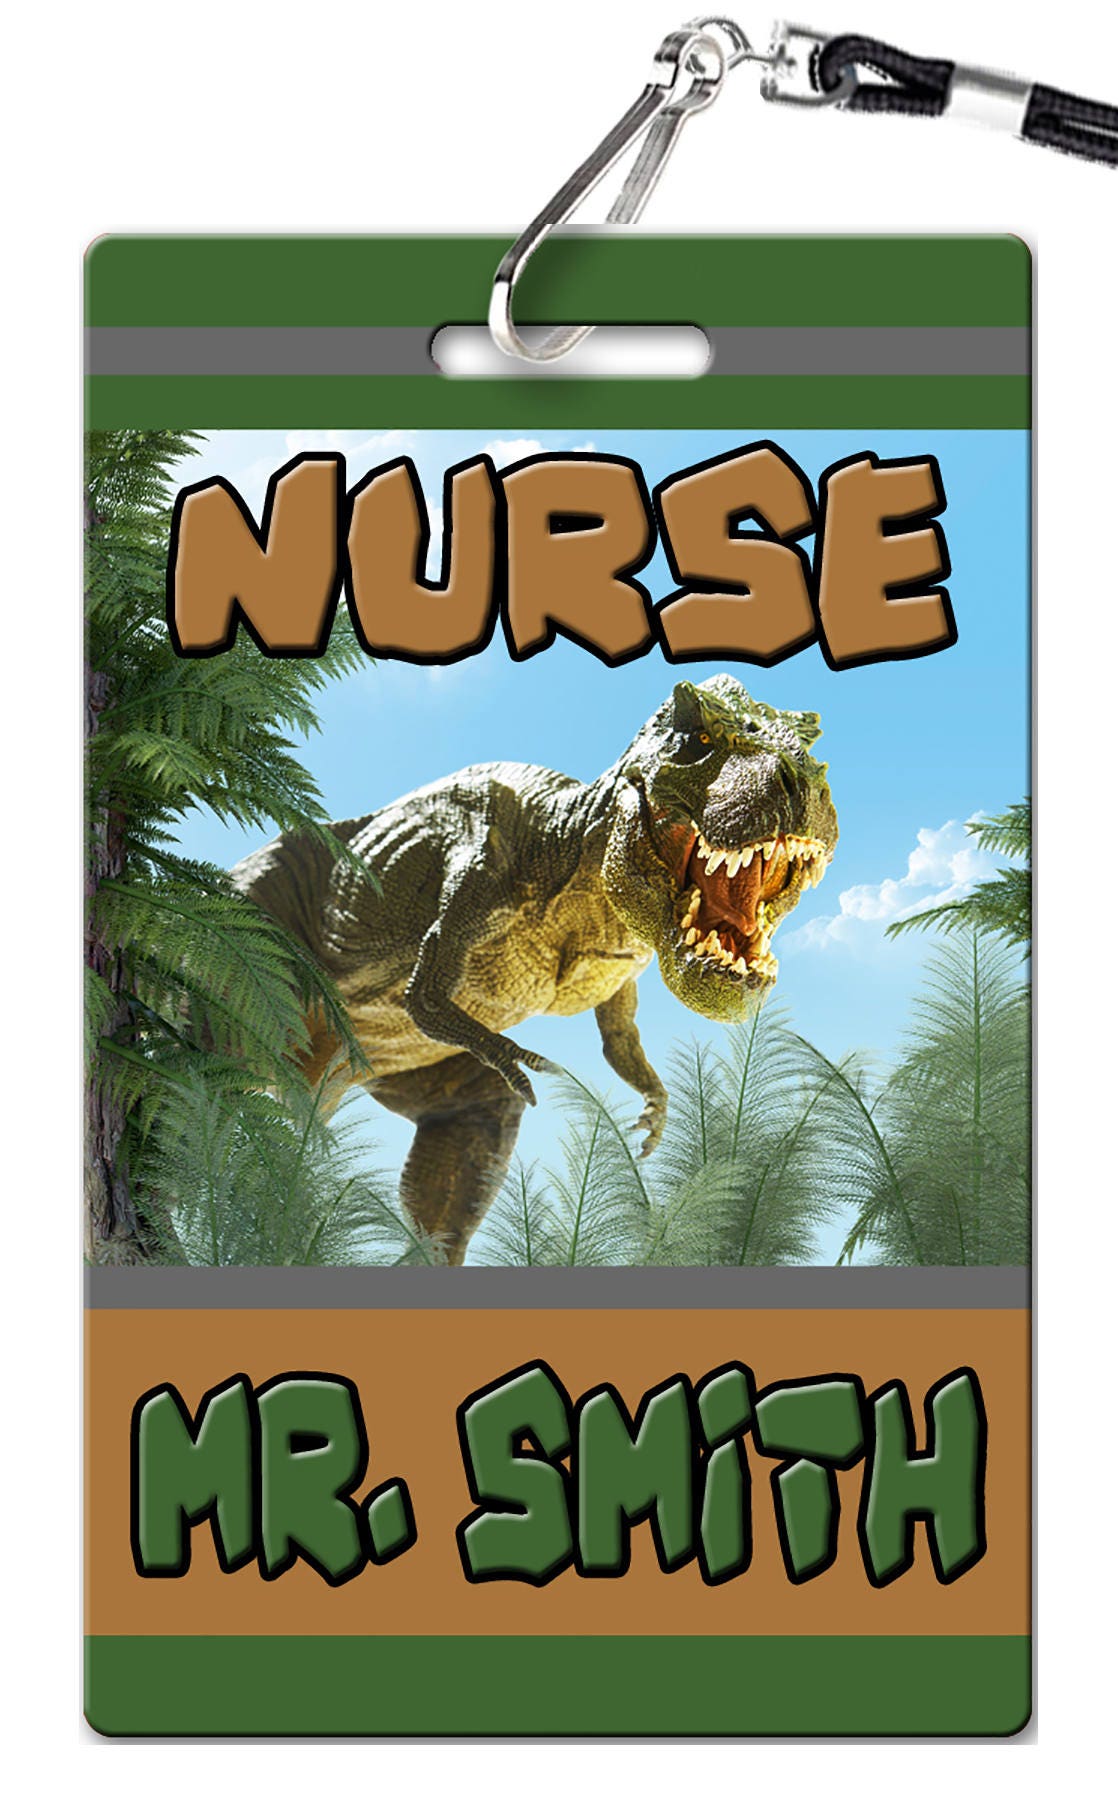 School Teacher Hall Pass Dinosaur Roarsome Badge